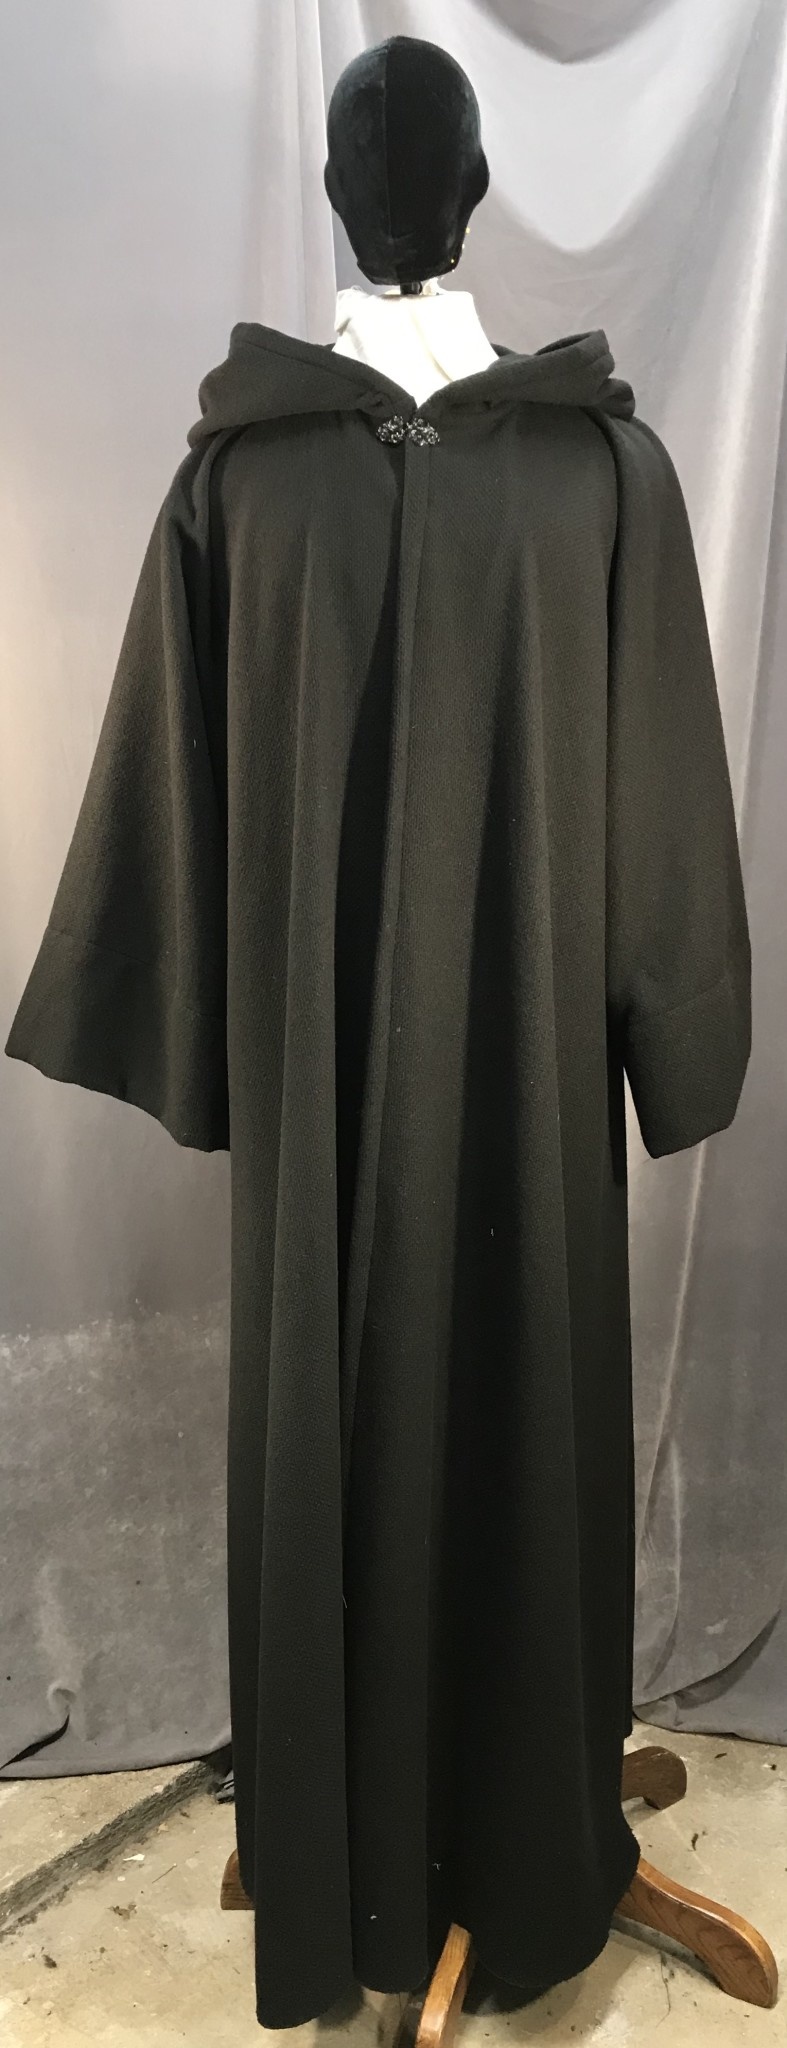 R450 - XXL Black Wool Holocaust Robe, Black Vale Clasp